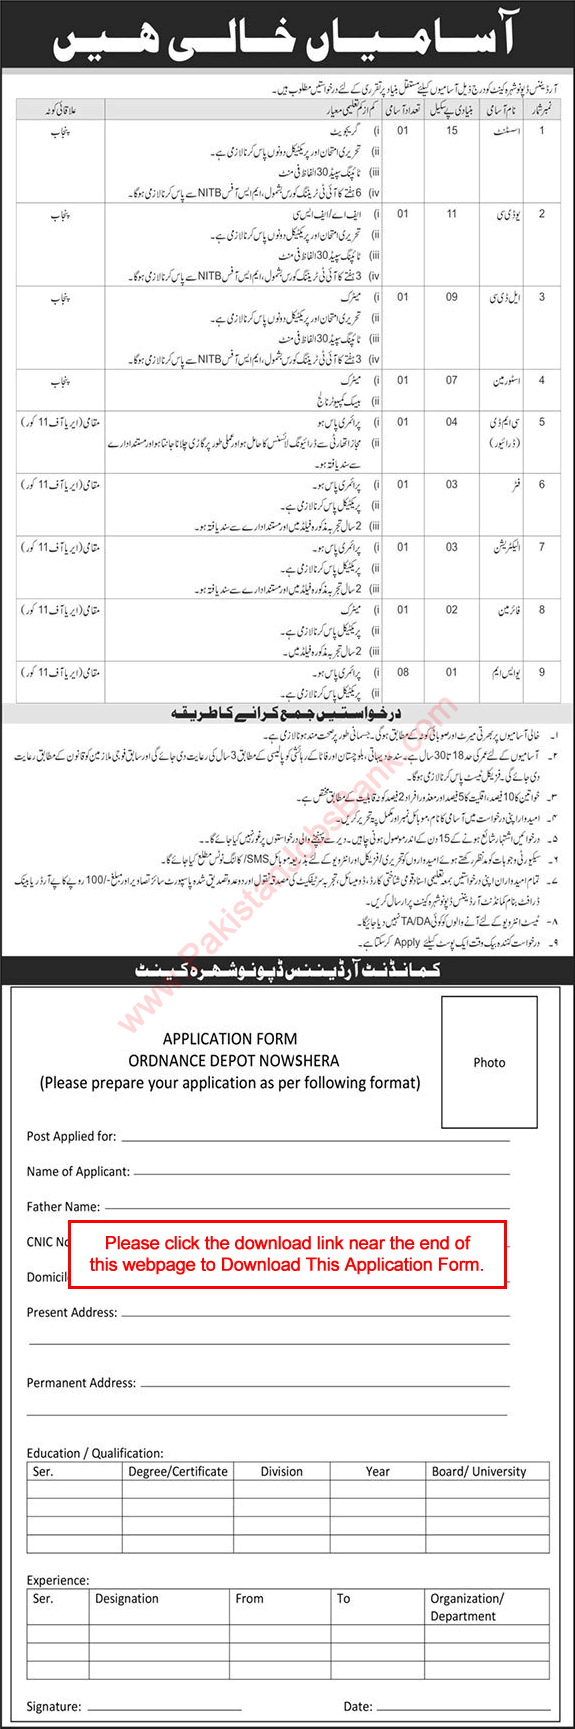 Ordnance Depot Nowshera Jobs 2021 December Application Form Pakistan Army Latest